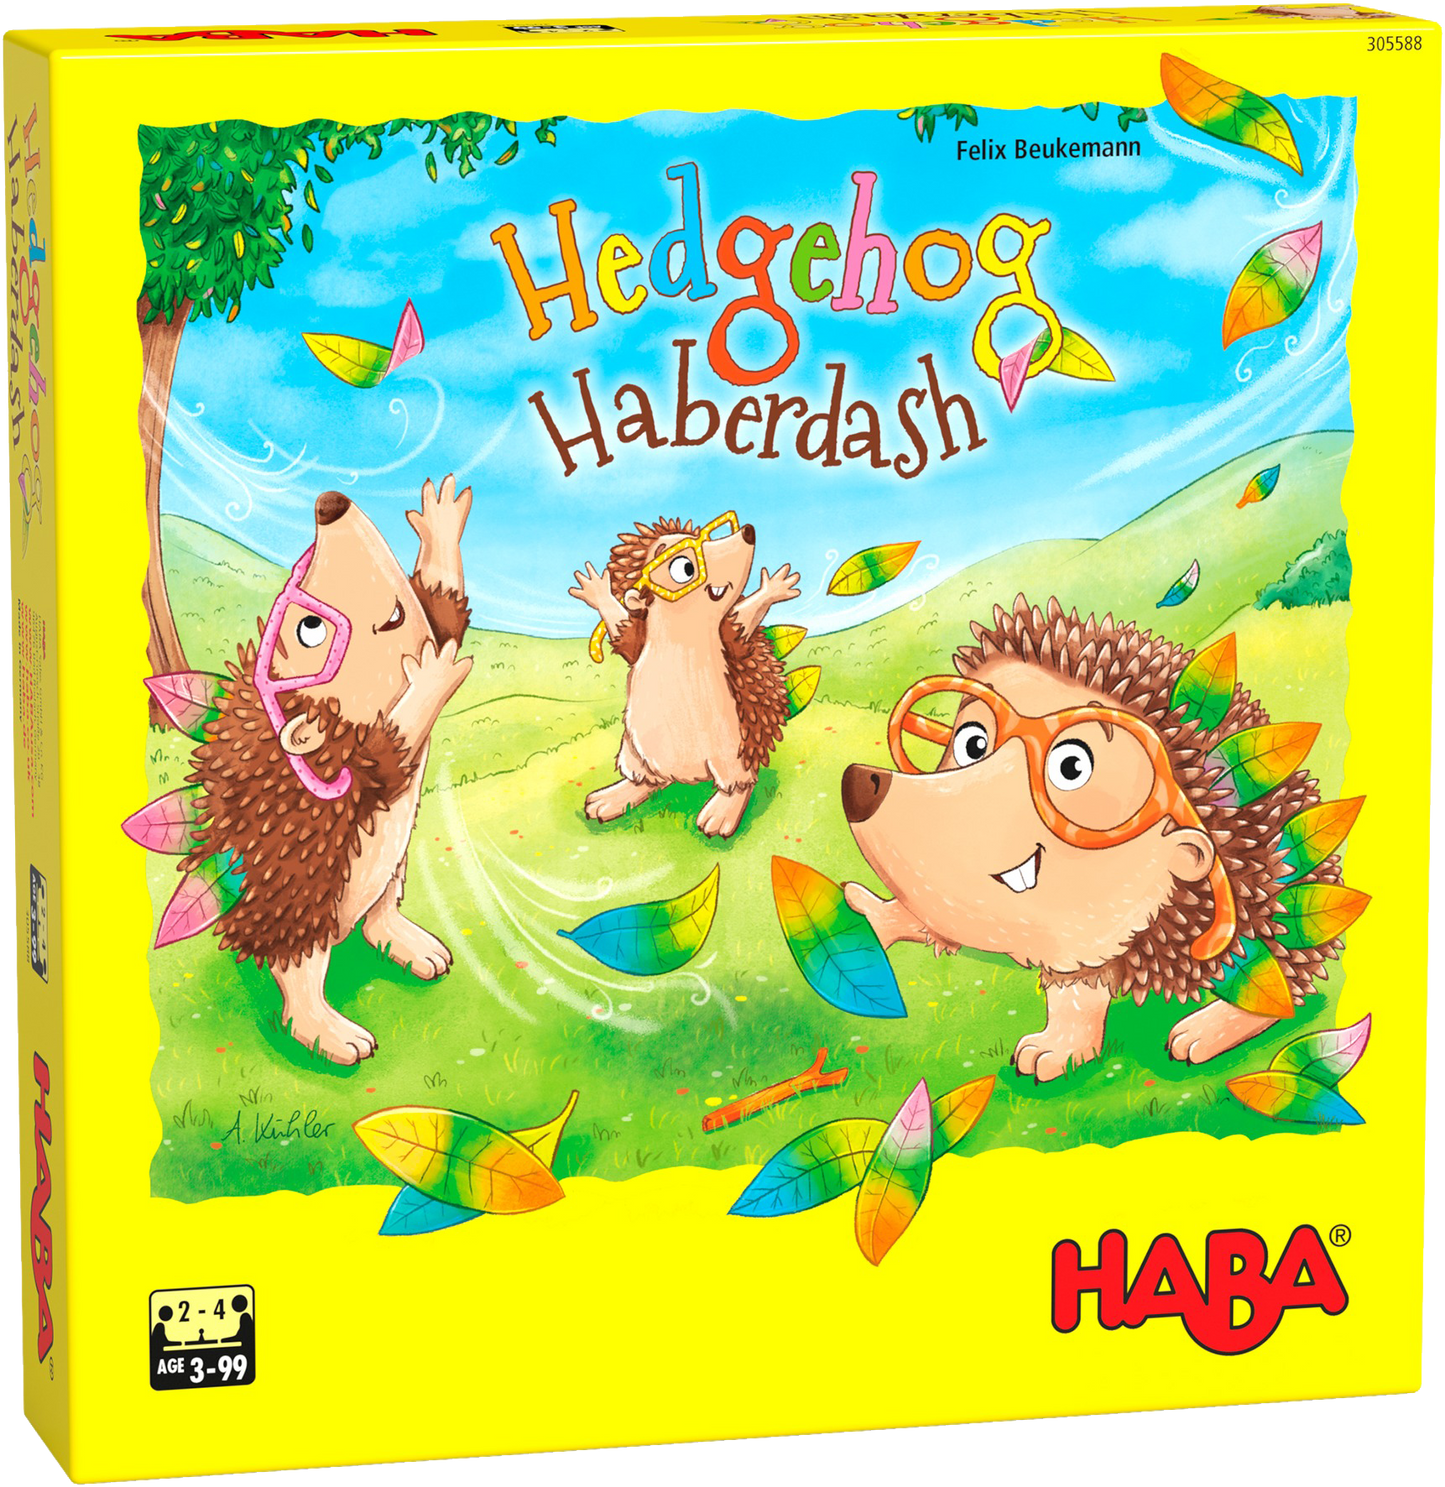 HABA - Hedgehog Haberdash